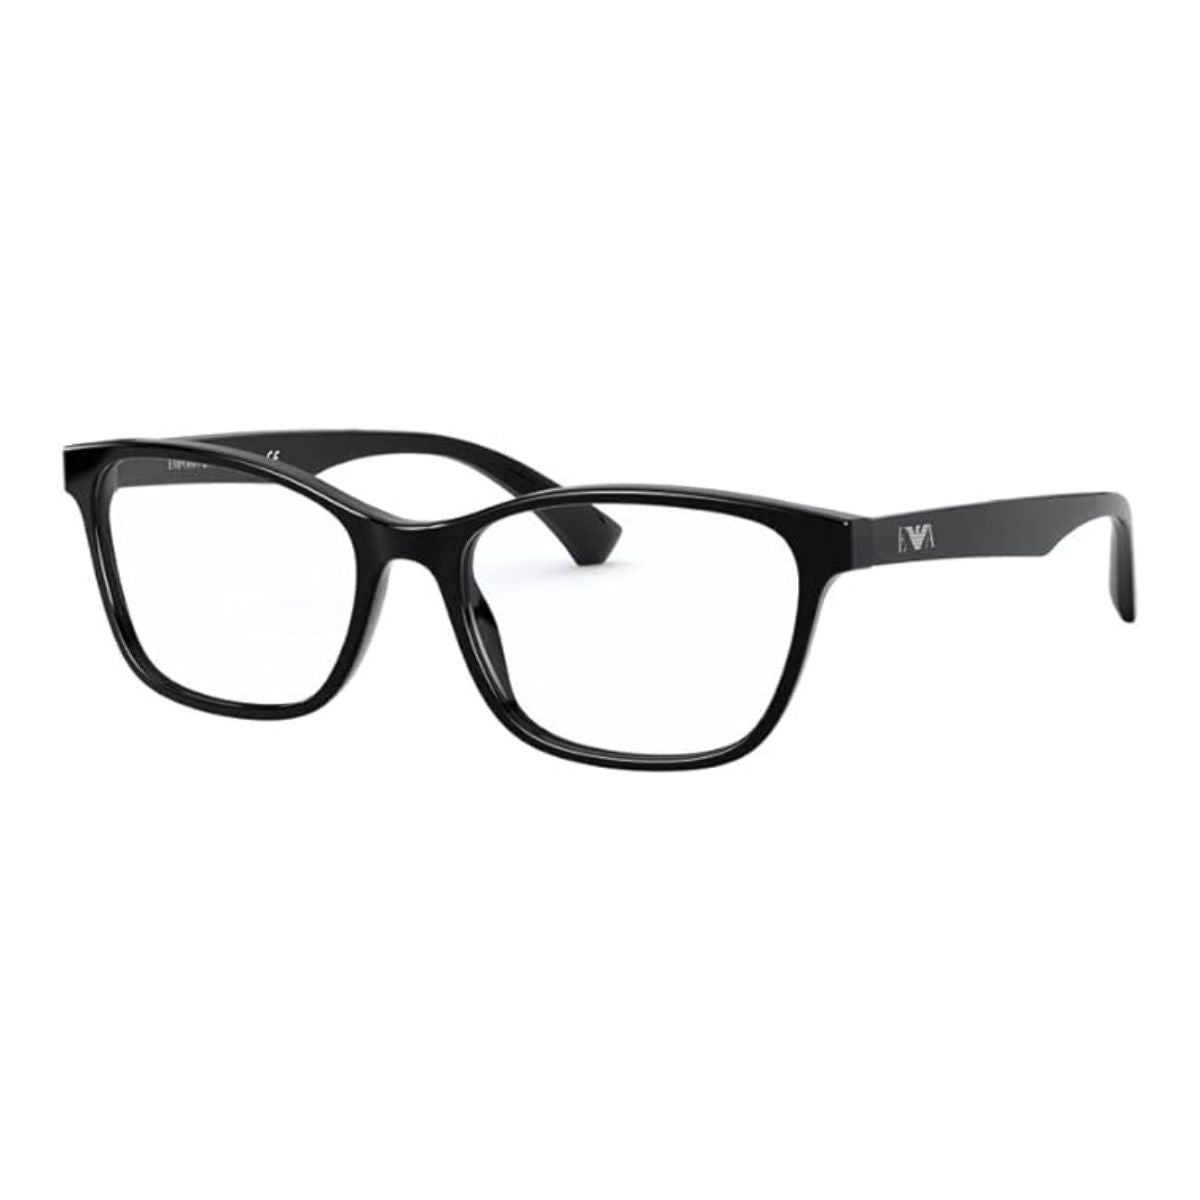 "buy Emporio Armani 3157 5001 spectacle eyewear frame for women's online at optorium"